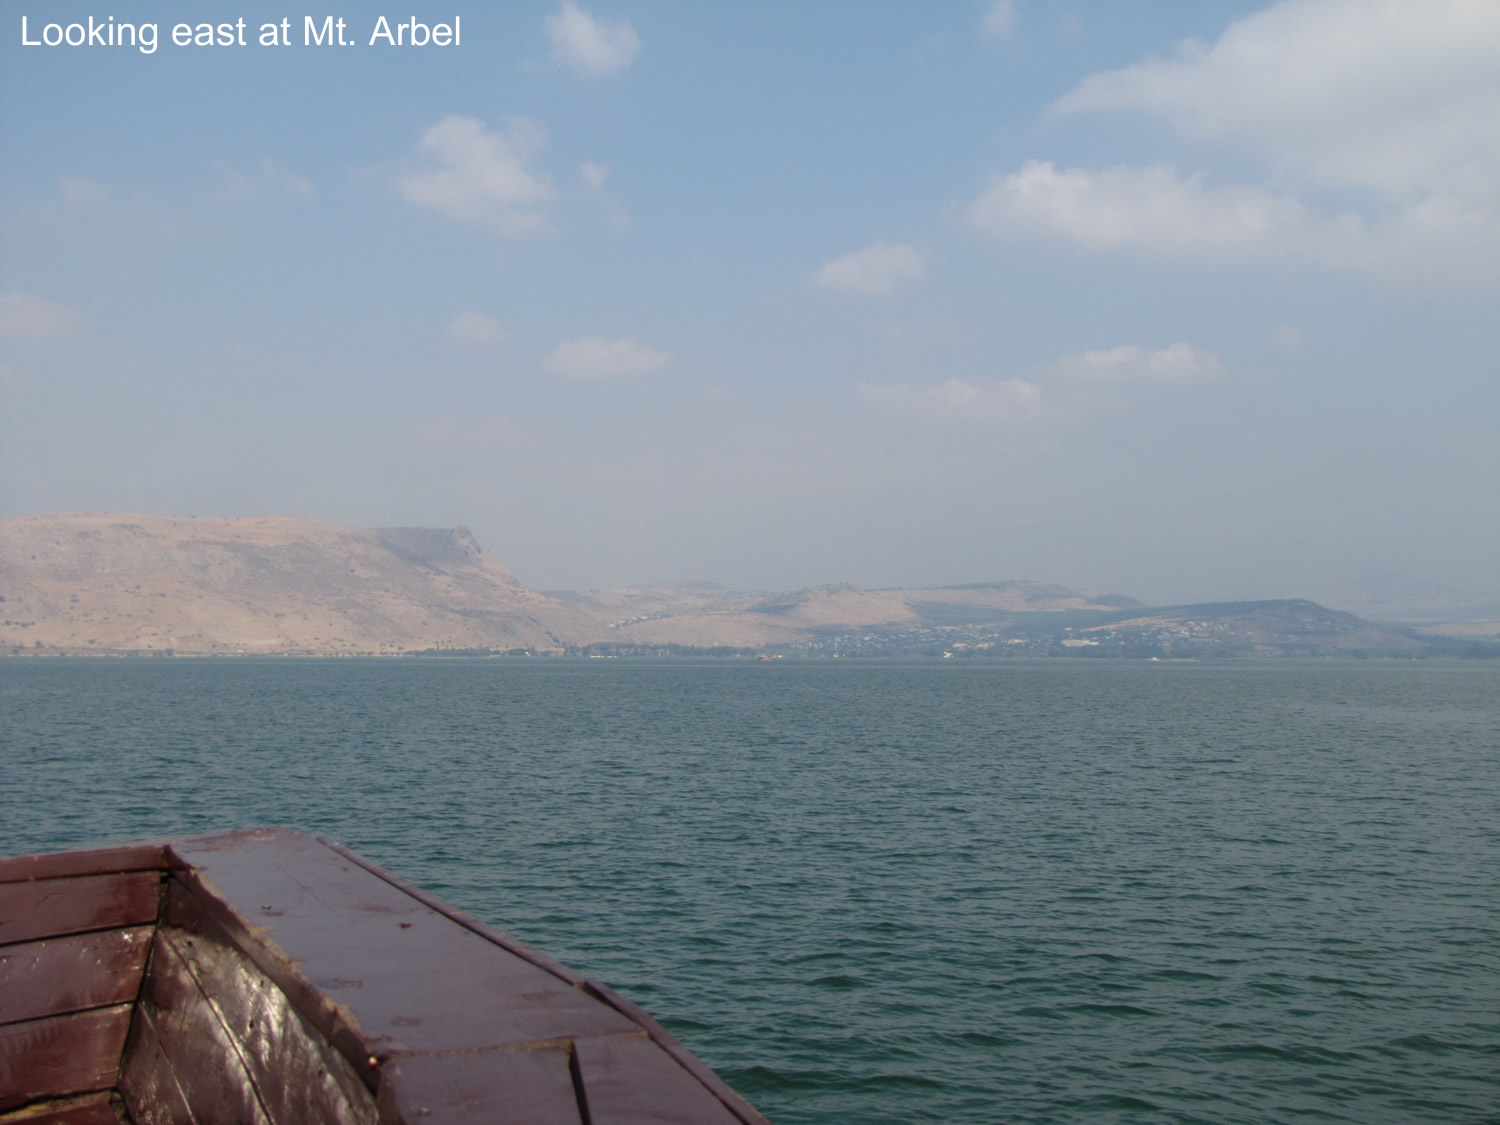 Sea of Galilee, boat, Arbel